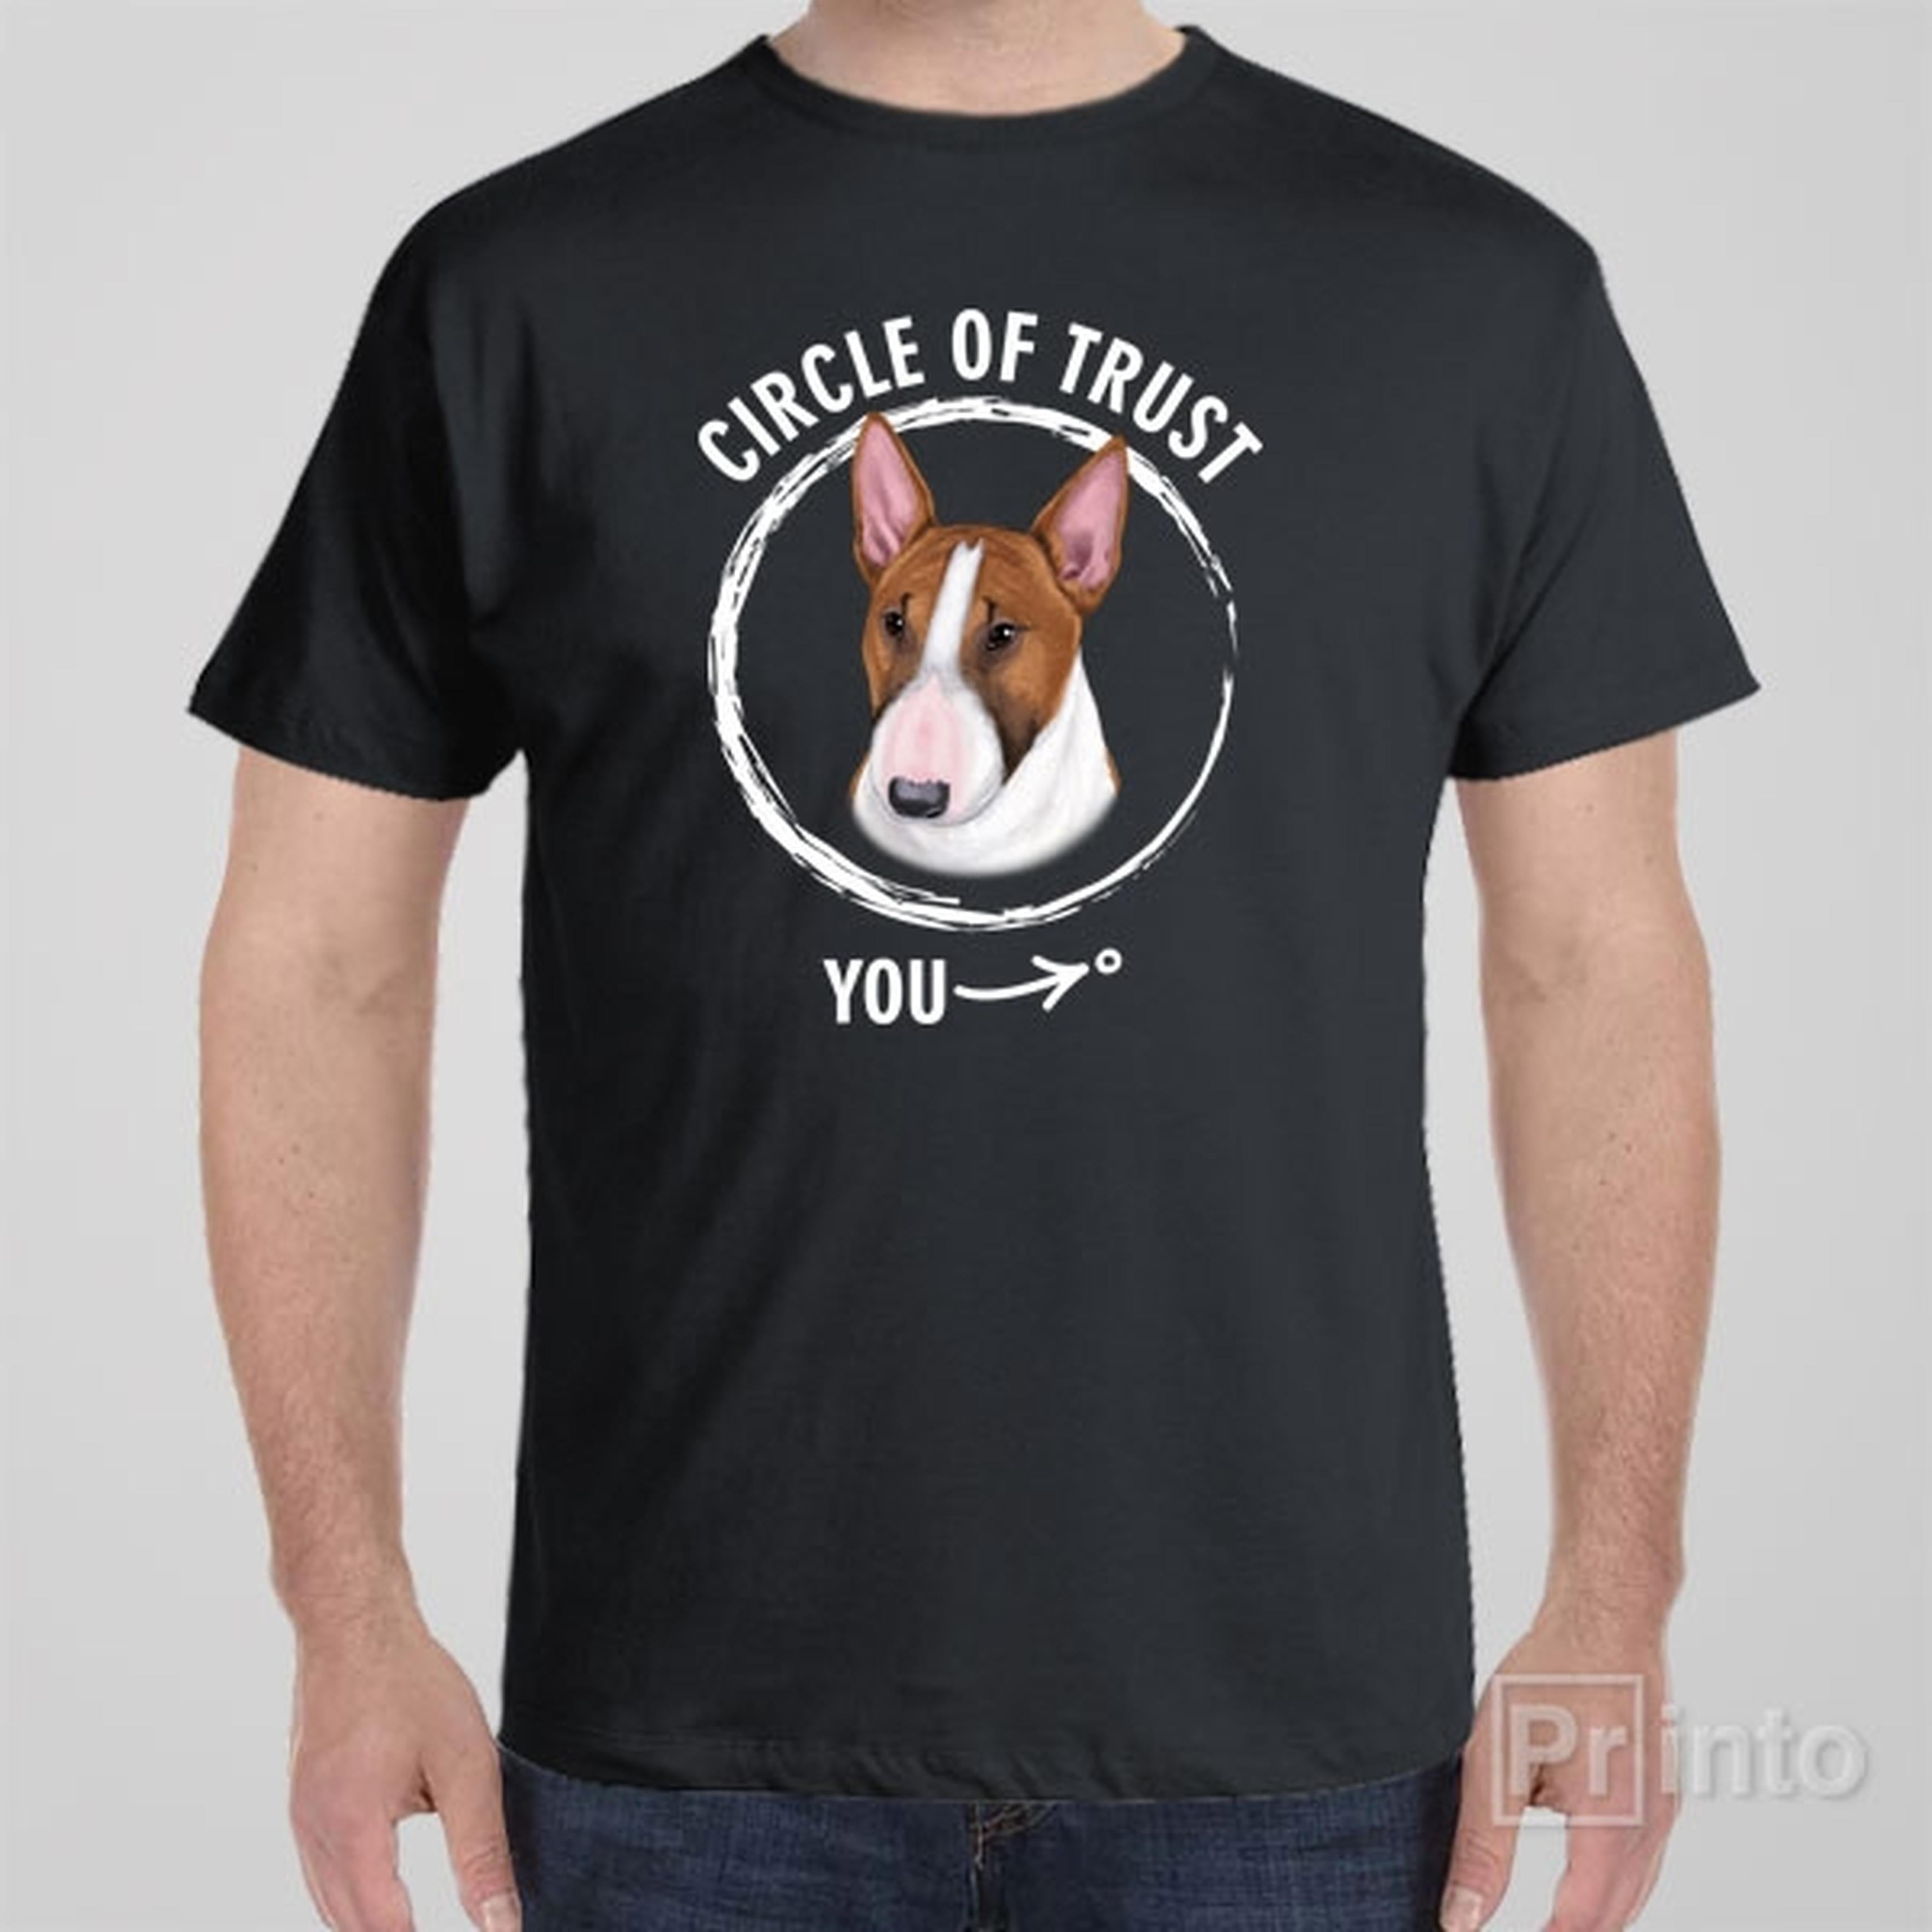 circle-of-trust-bull-terrier-t-shirt